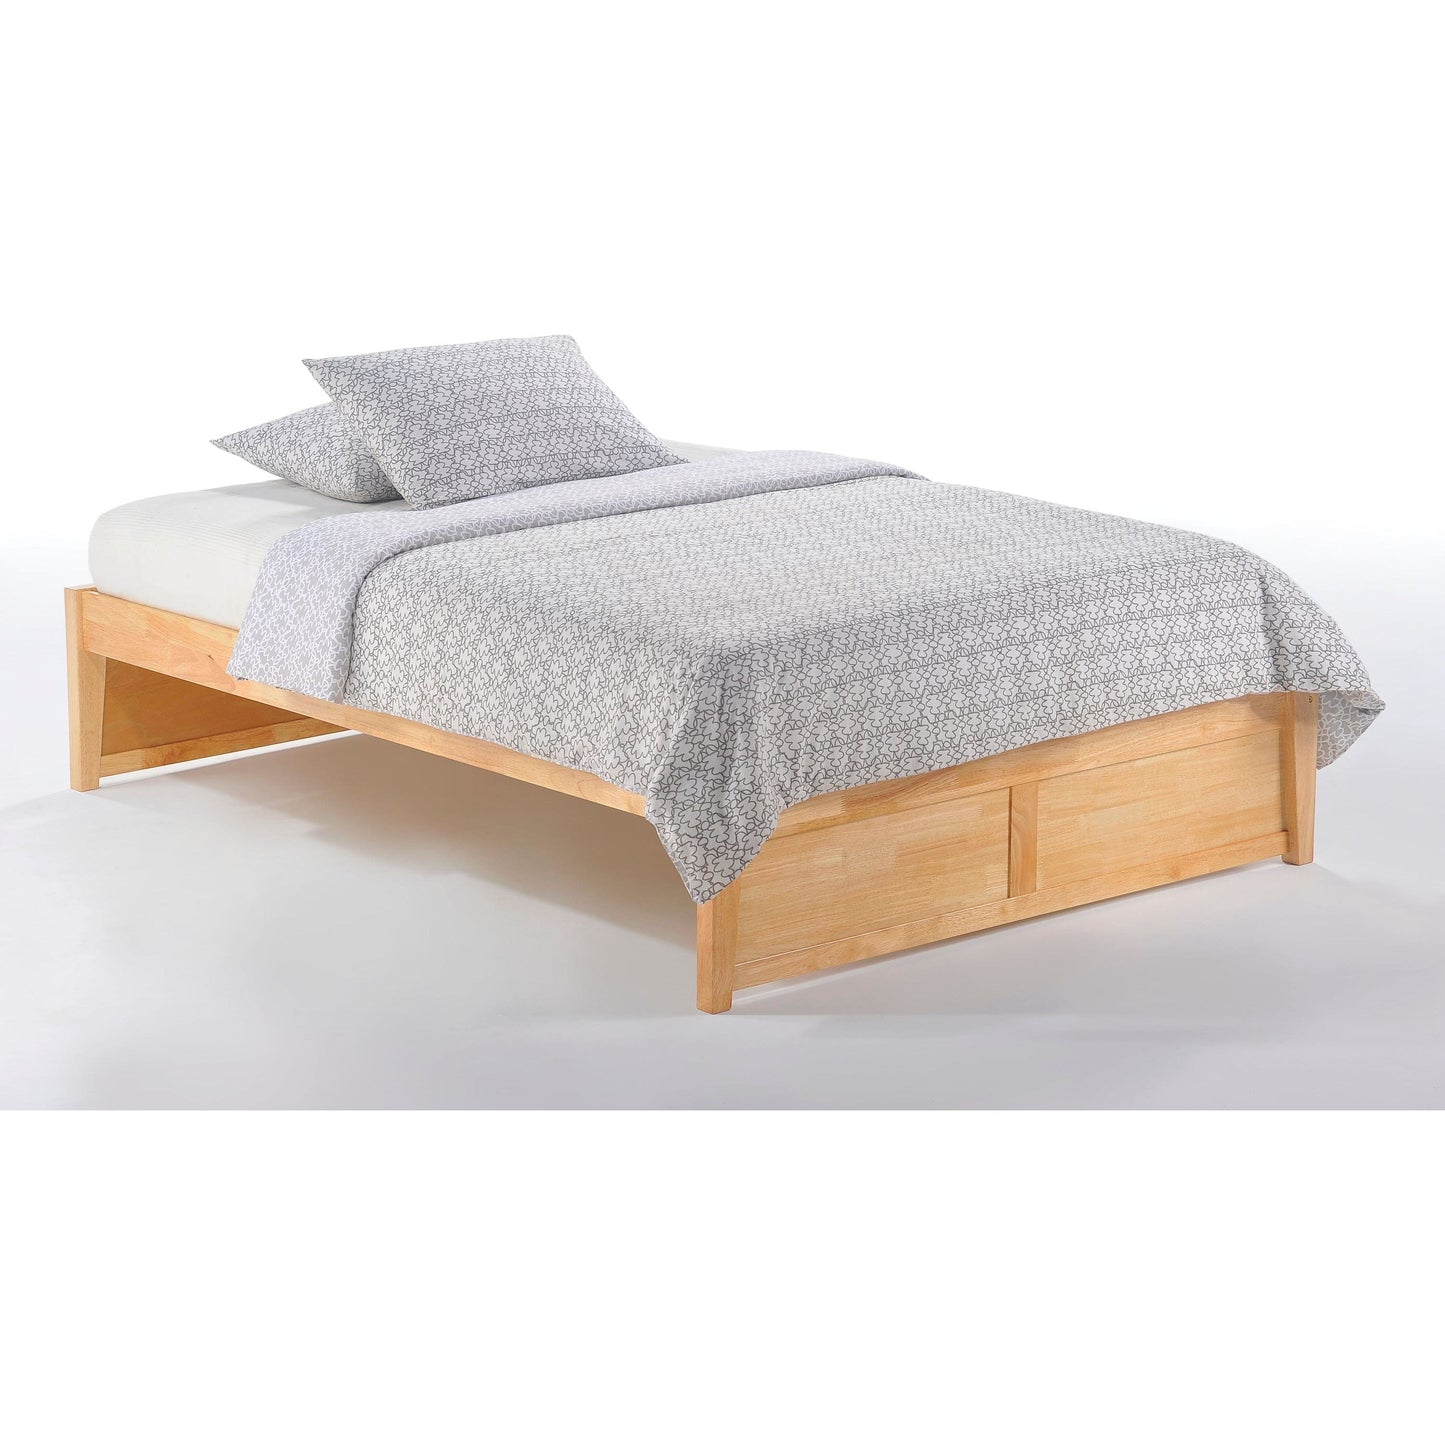 The Bedroom Emporium Full Basic Platform Bed in cherry finish (K Series)